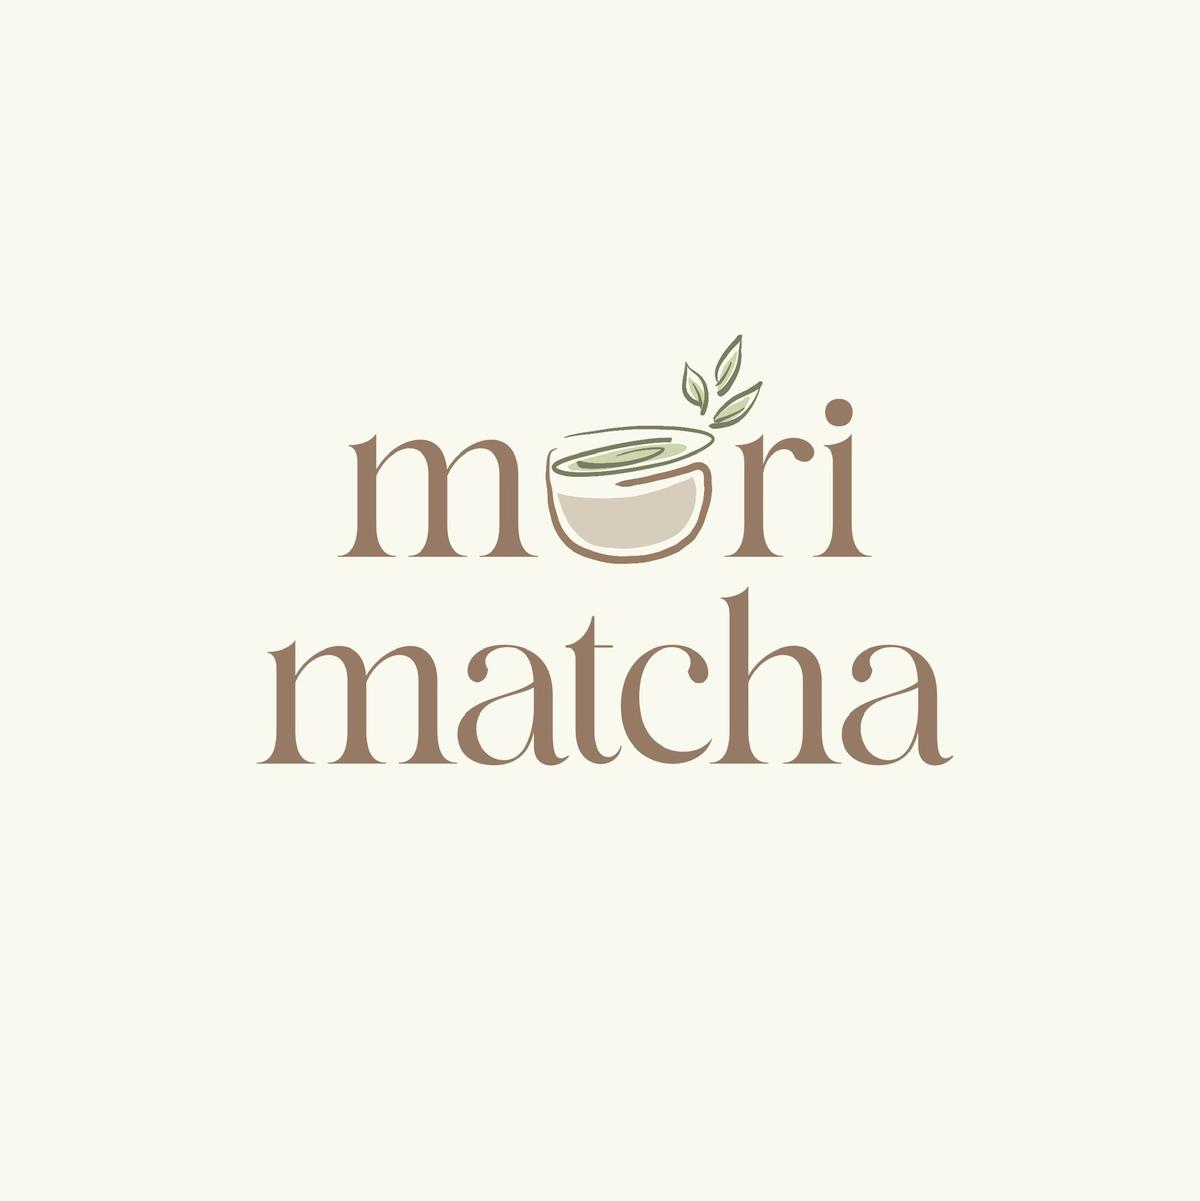 mori matcha's images